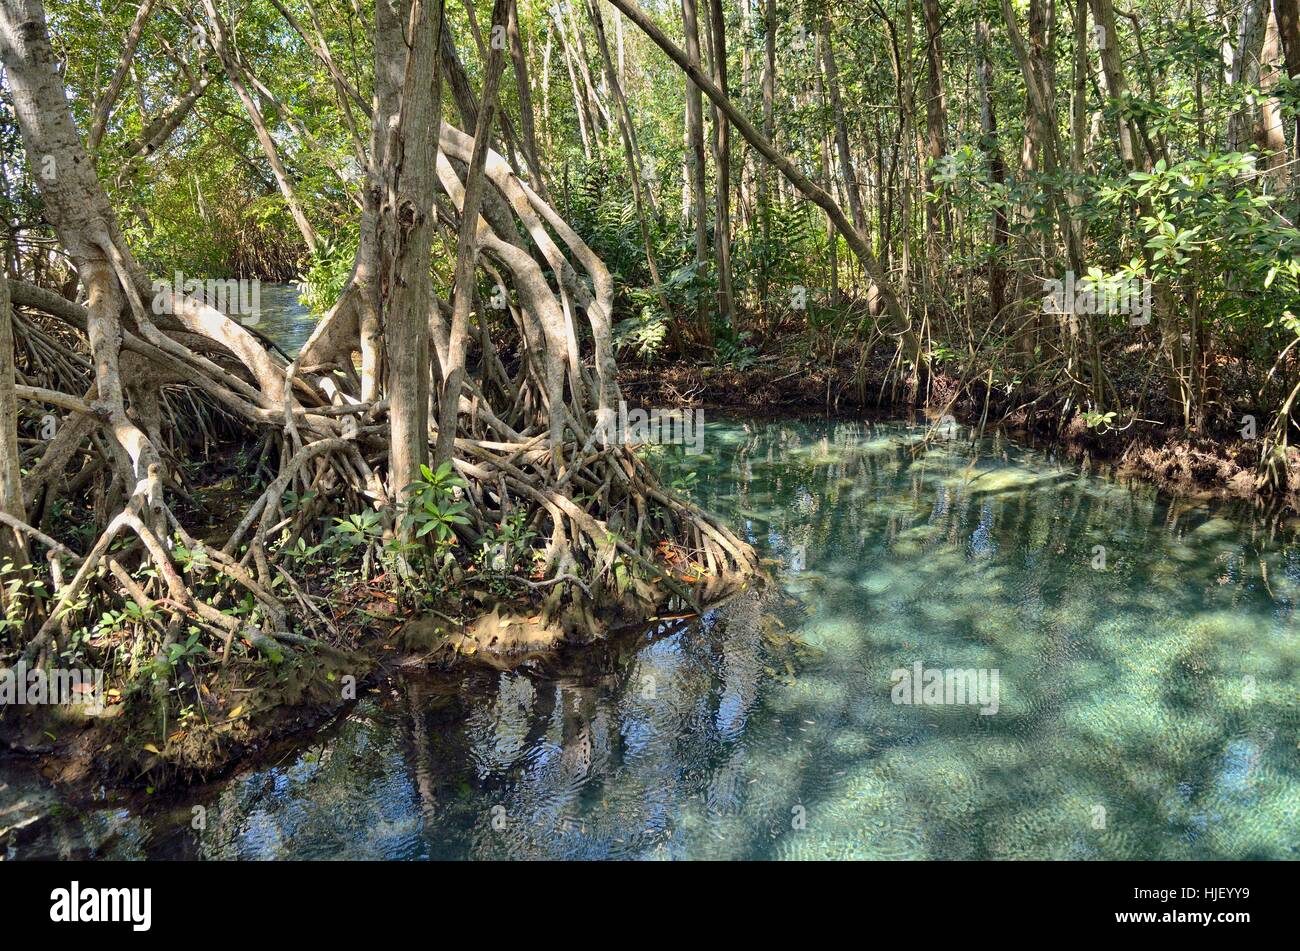 Fuente de agua dulce en el bosque de mangle (Rhizophora), cerca de Celestún, Yucatán, México. Foto de stock